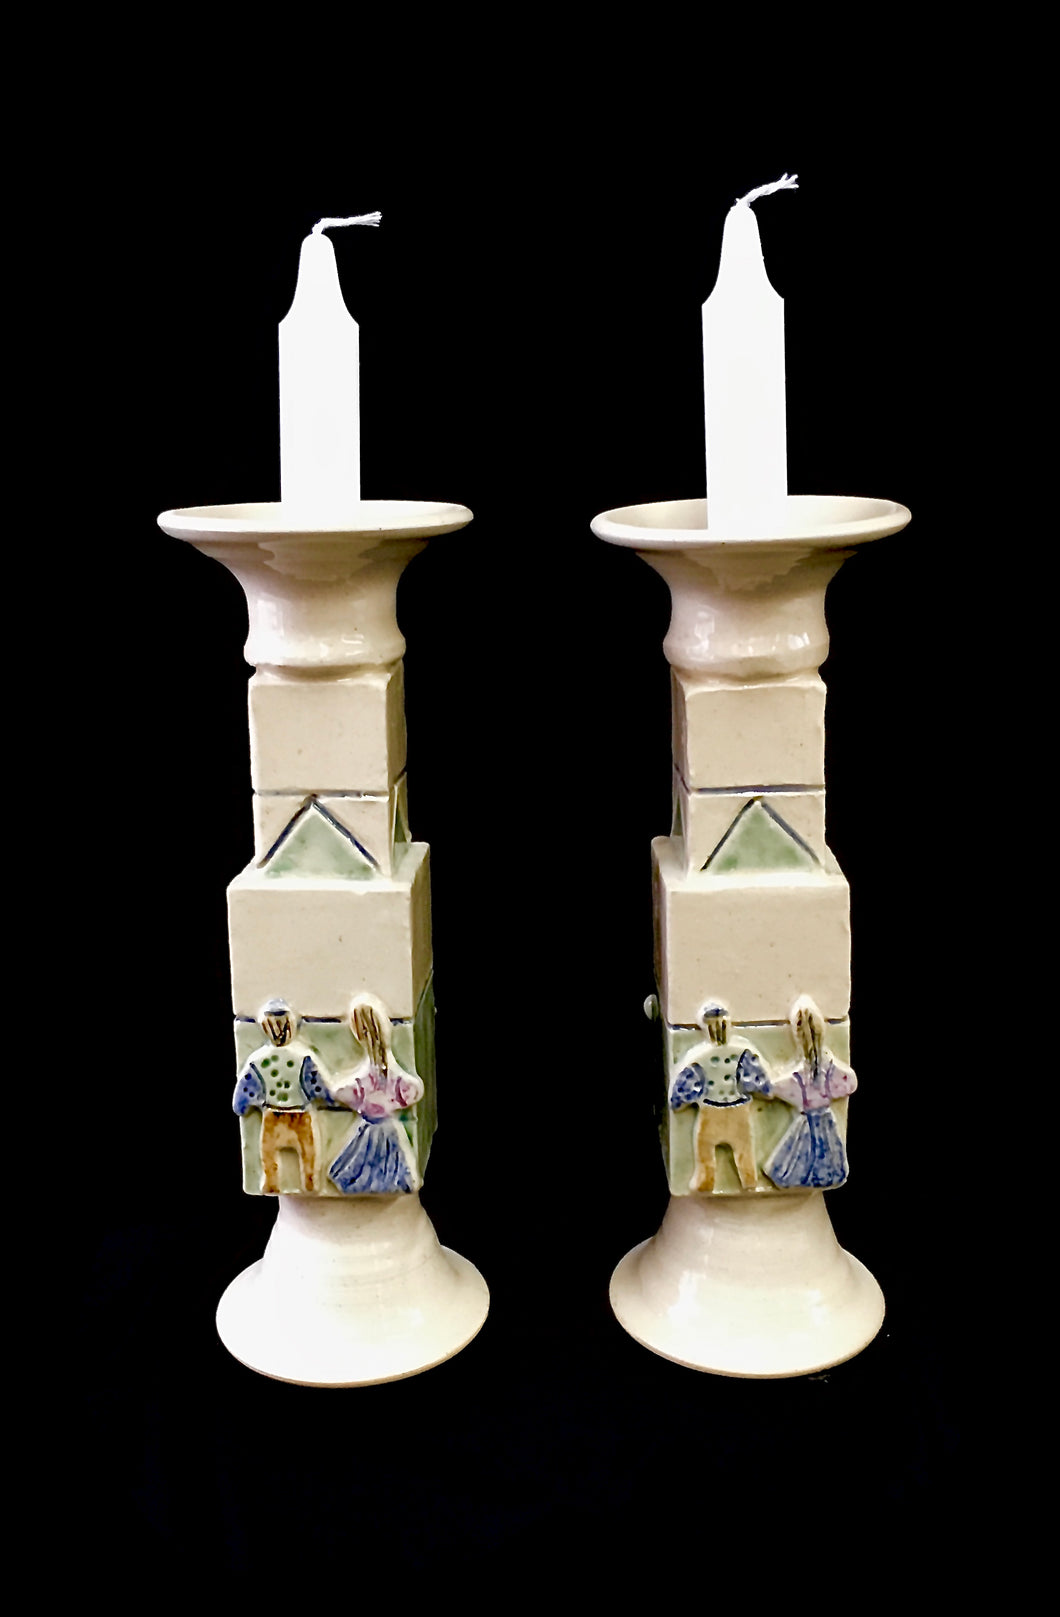 Shabbos Family Candlesticks